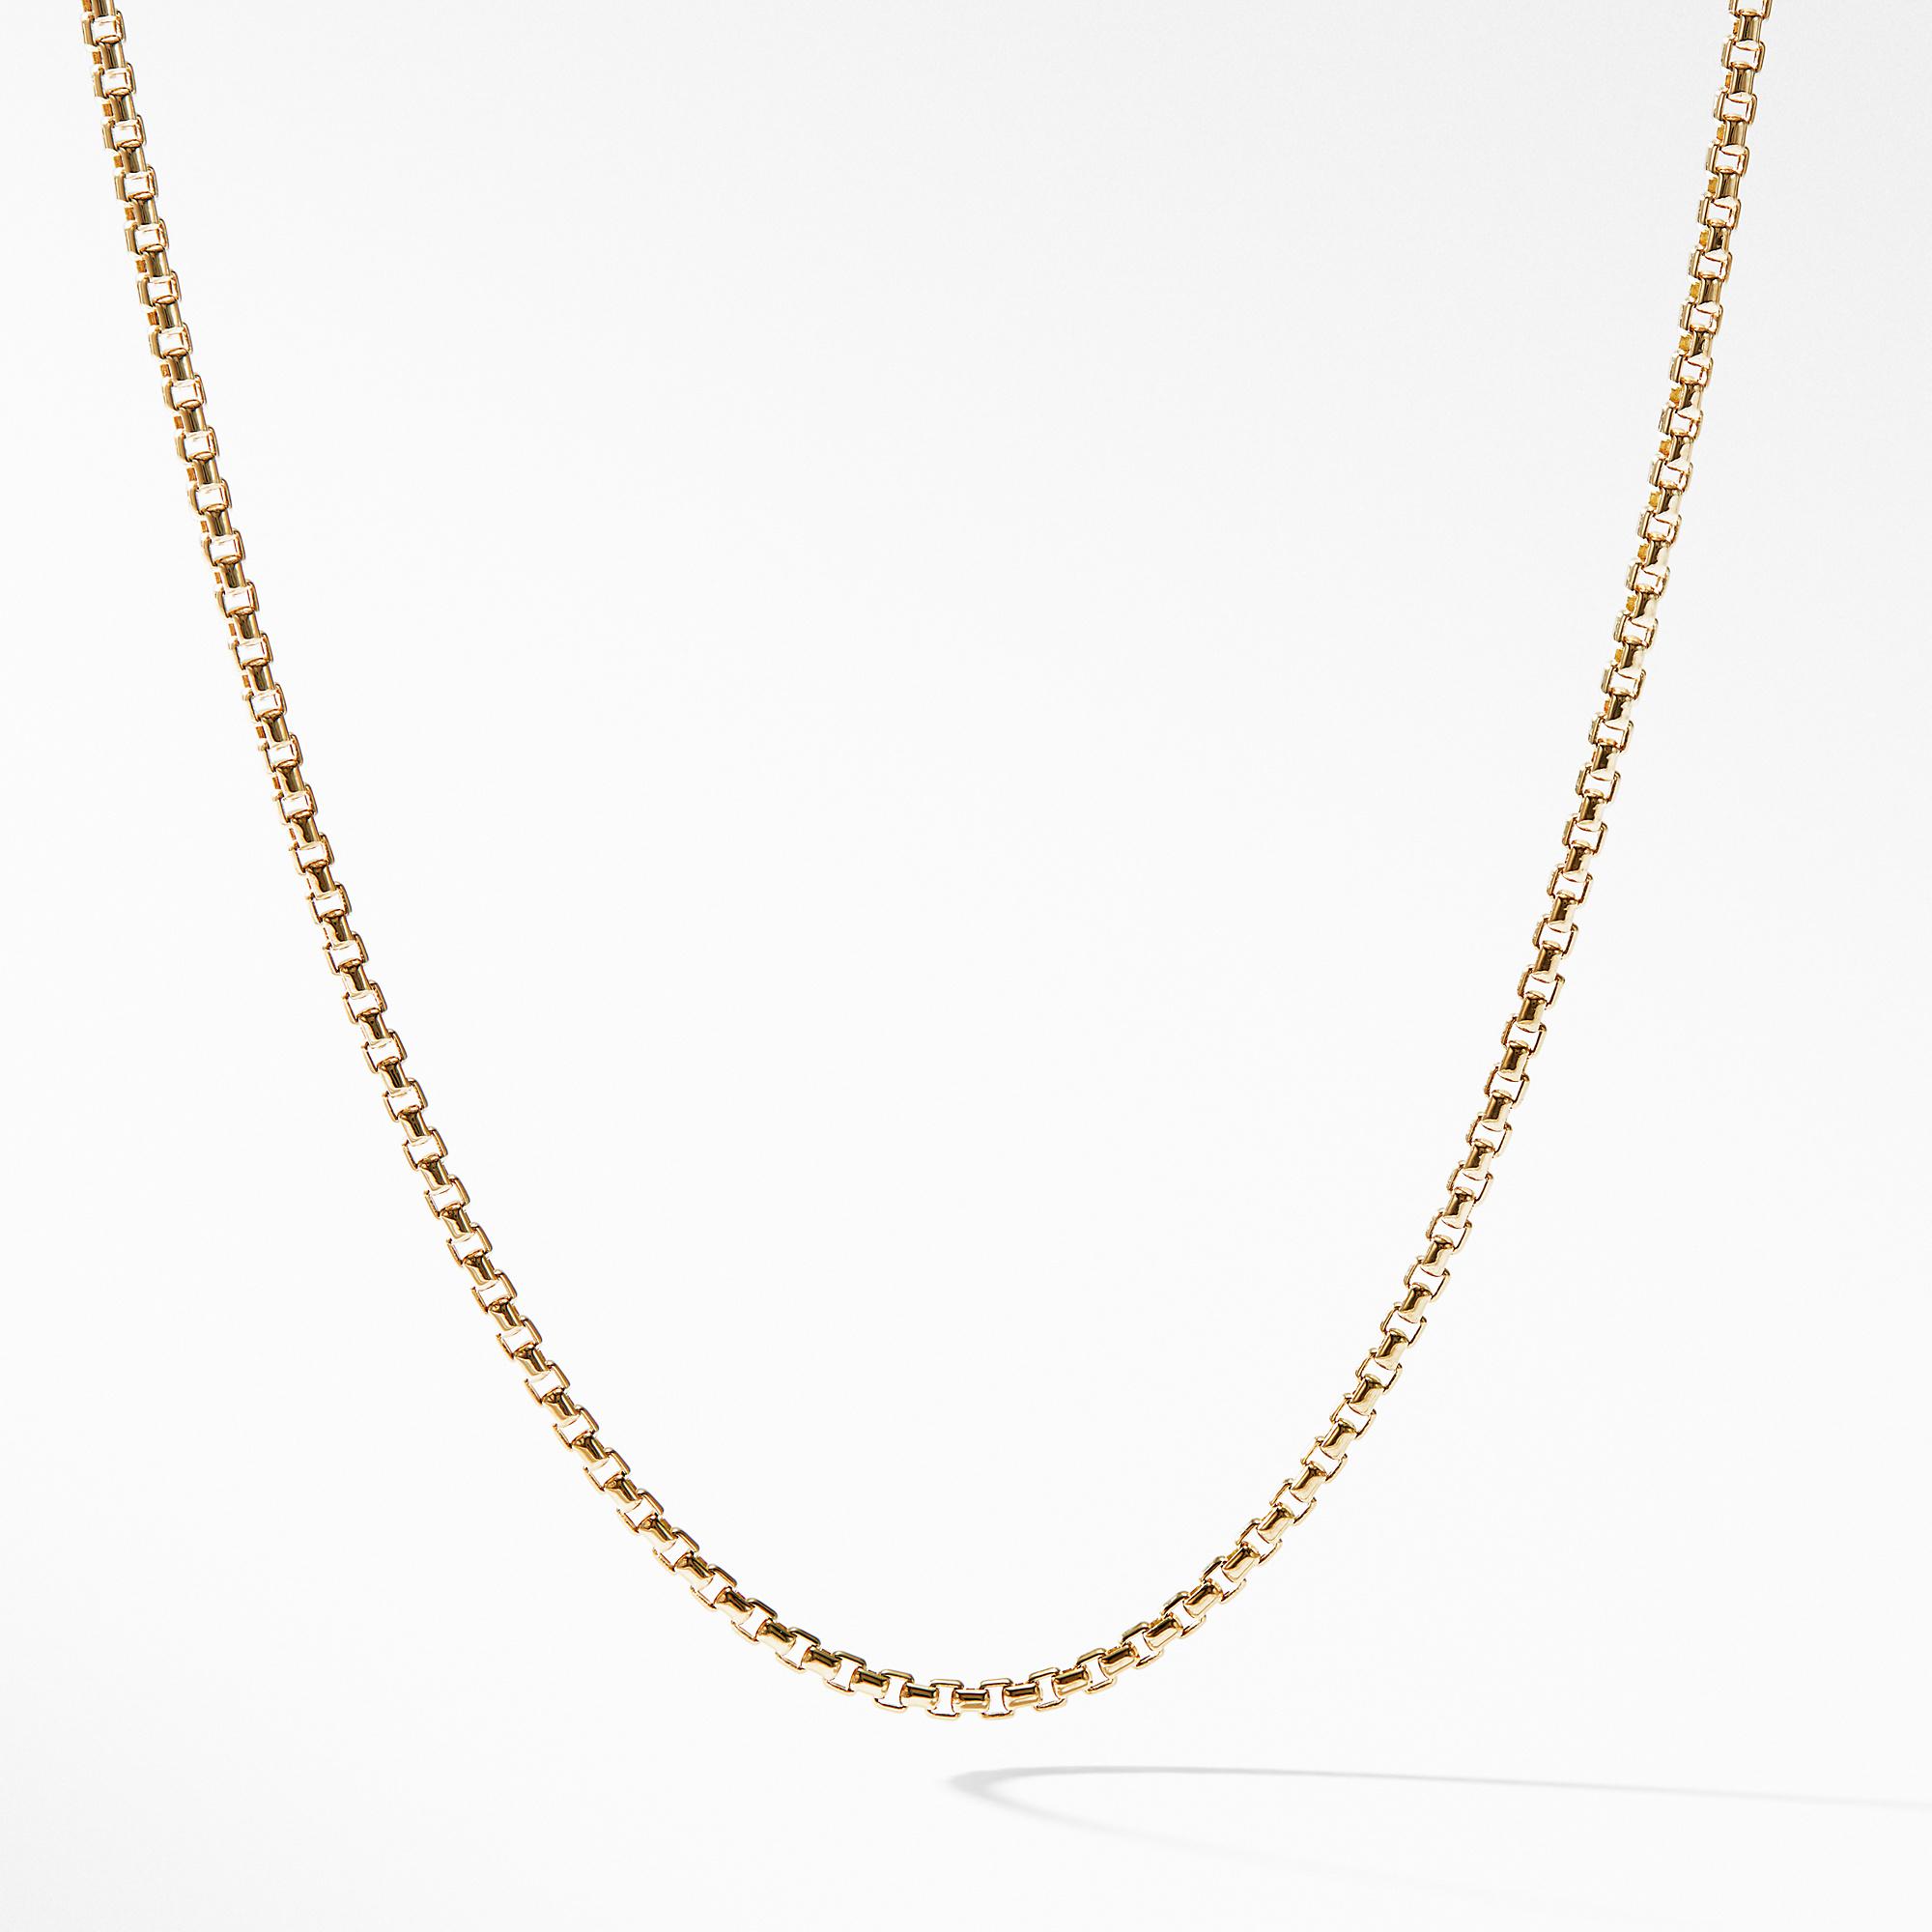 David Yurman Box Chain Necklace in 18K Yellow Gold, 18 inches